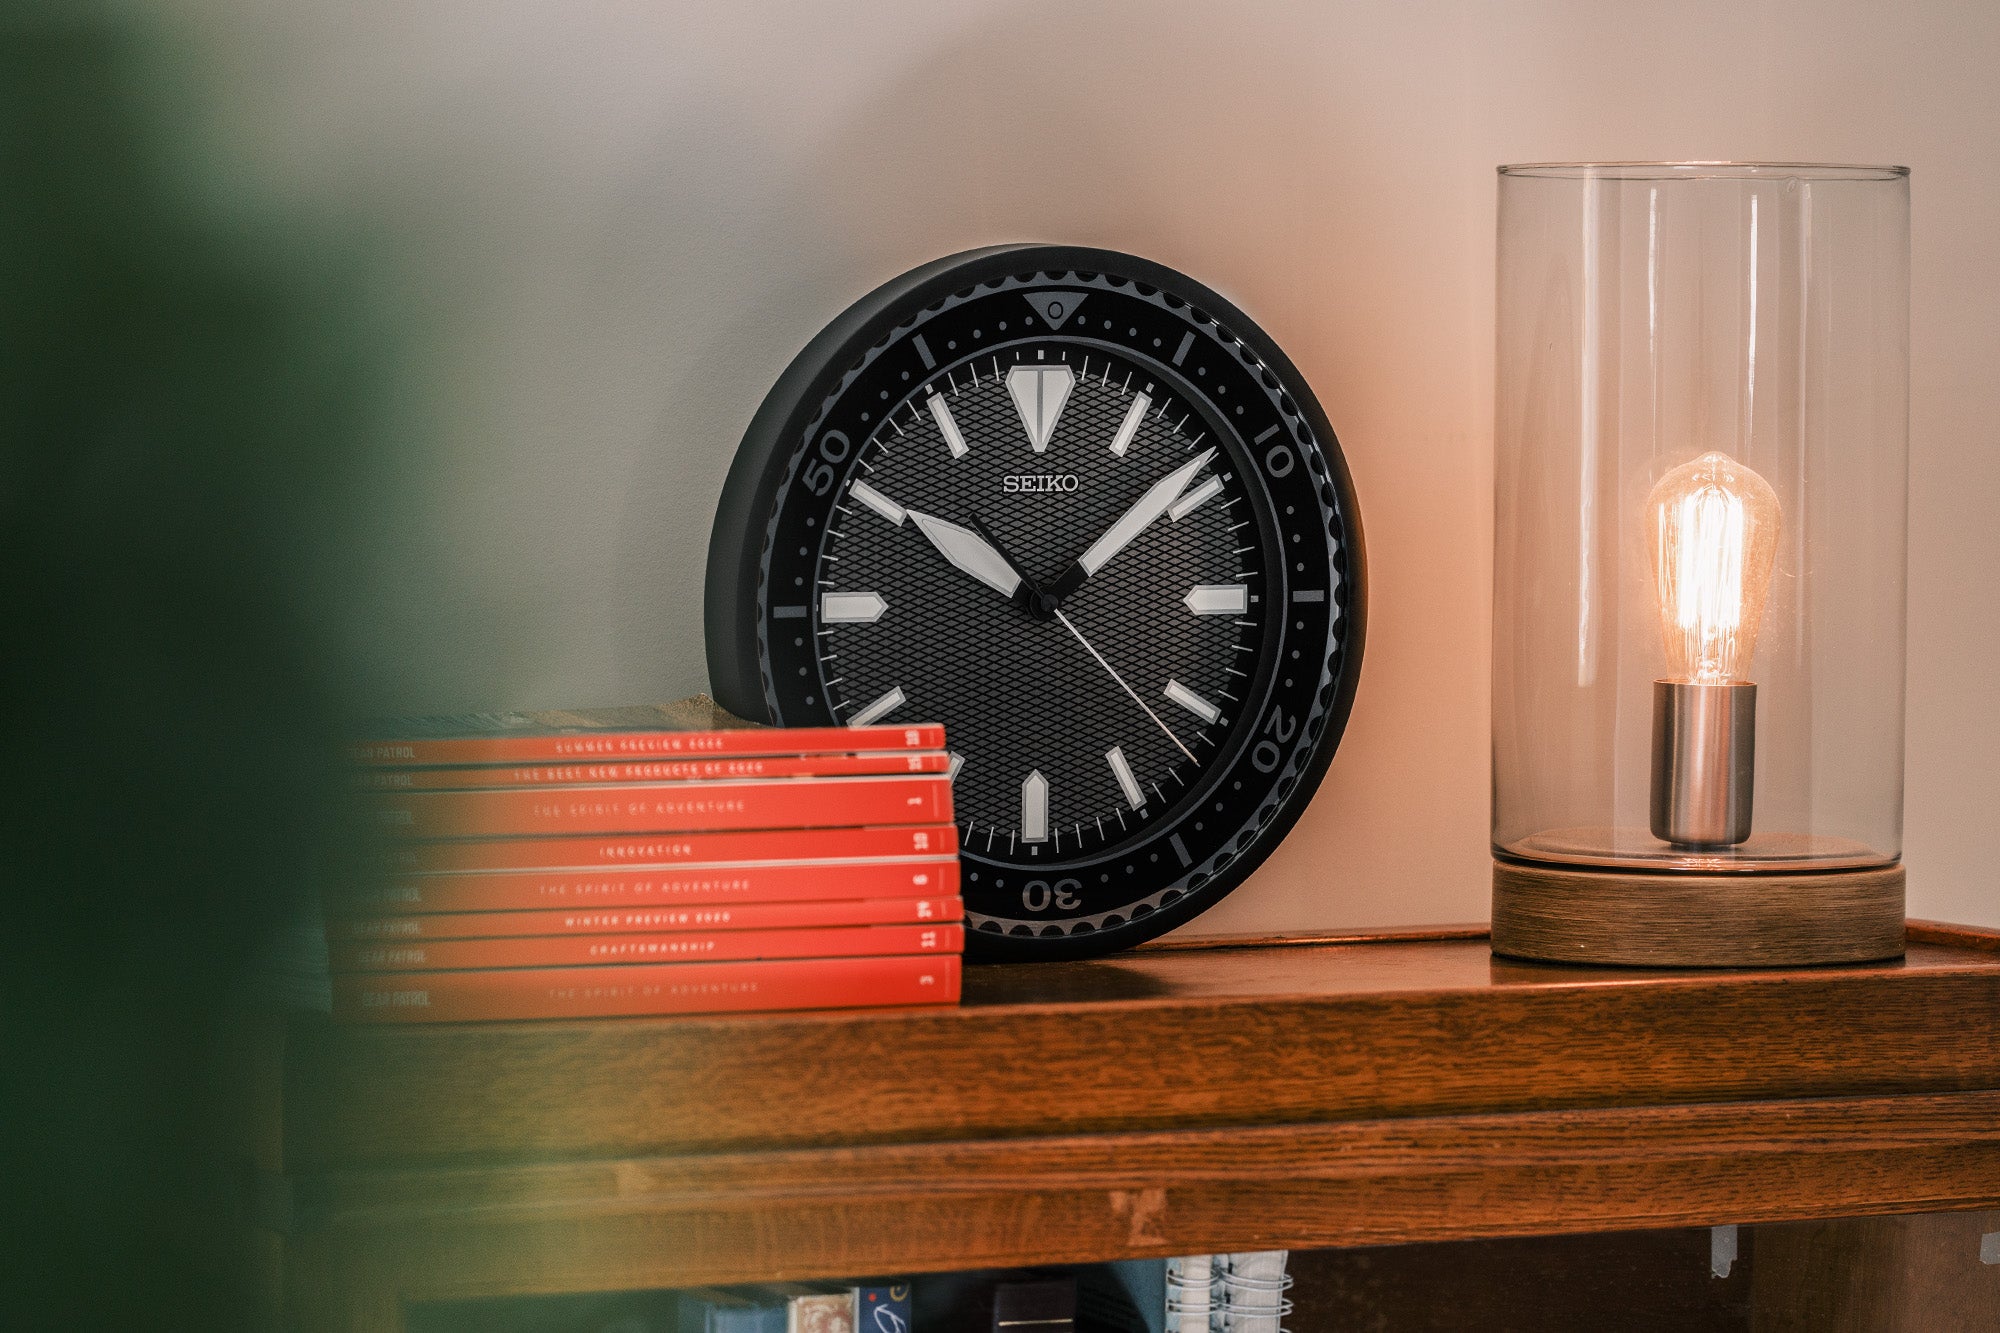 Clocks | Shop Quality Desk and Wall Clocks at Windup Watch Shop